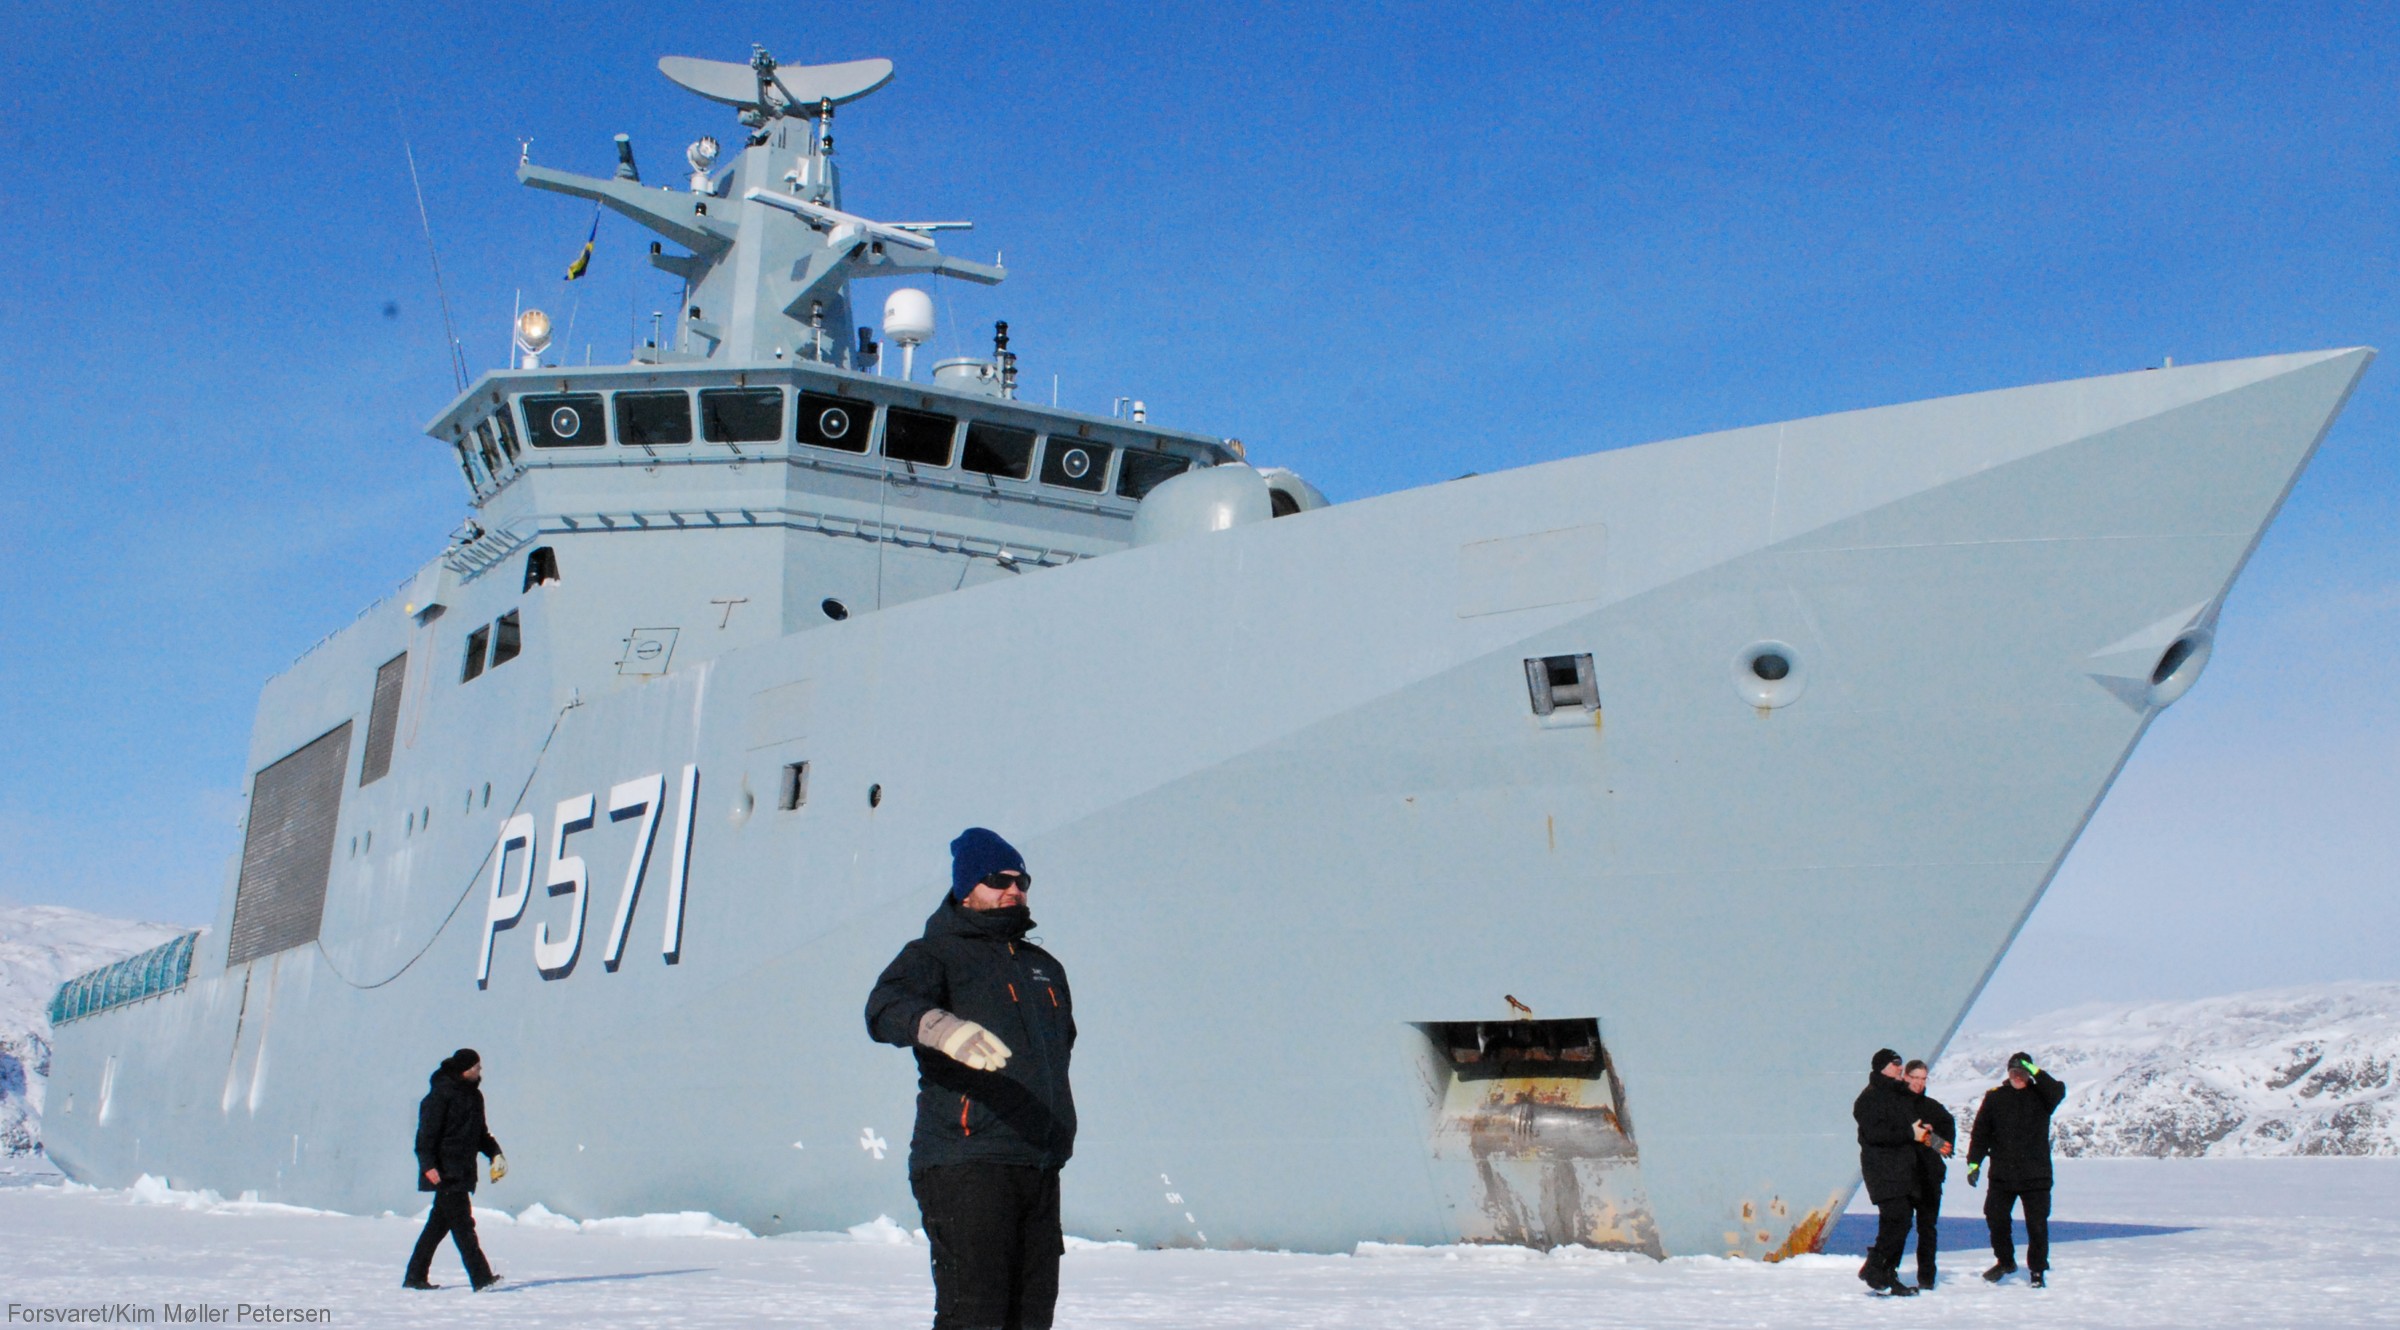 p-571 hdms ejnar mikkelsen knud rasmussen class offshore patrol vessel opv royal danish navy inspektionsfartøj 16 arctic ice